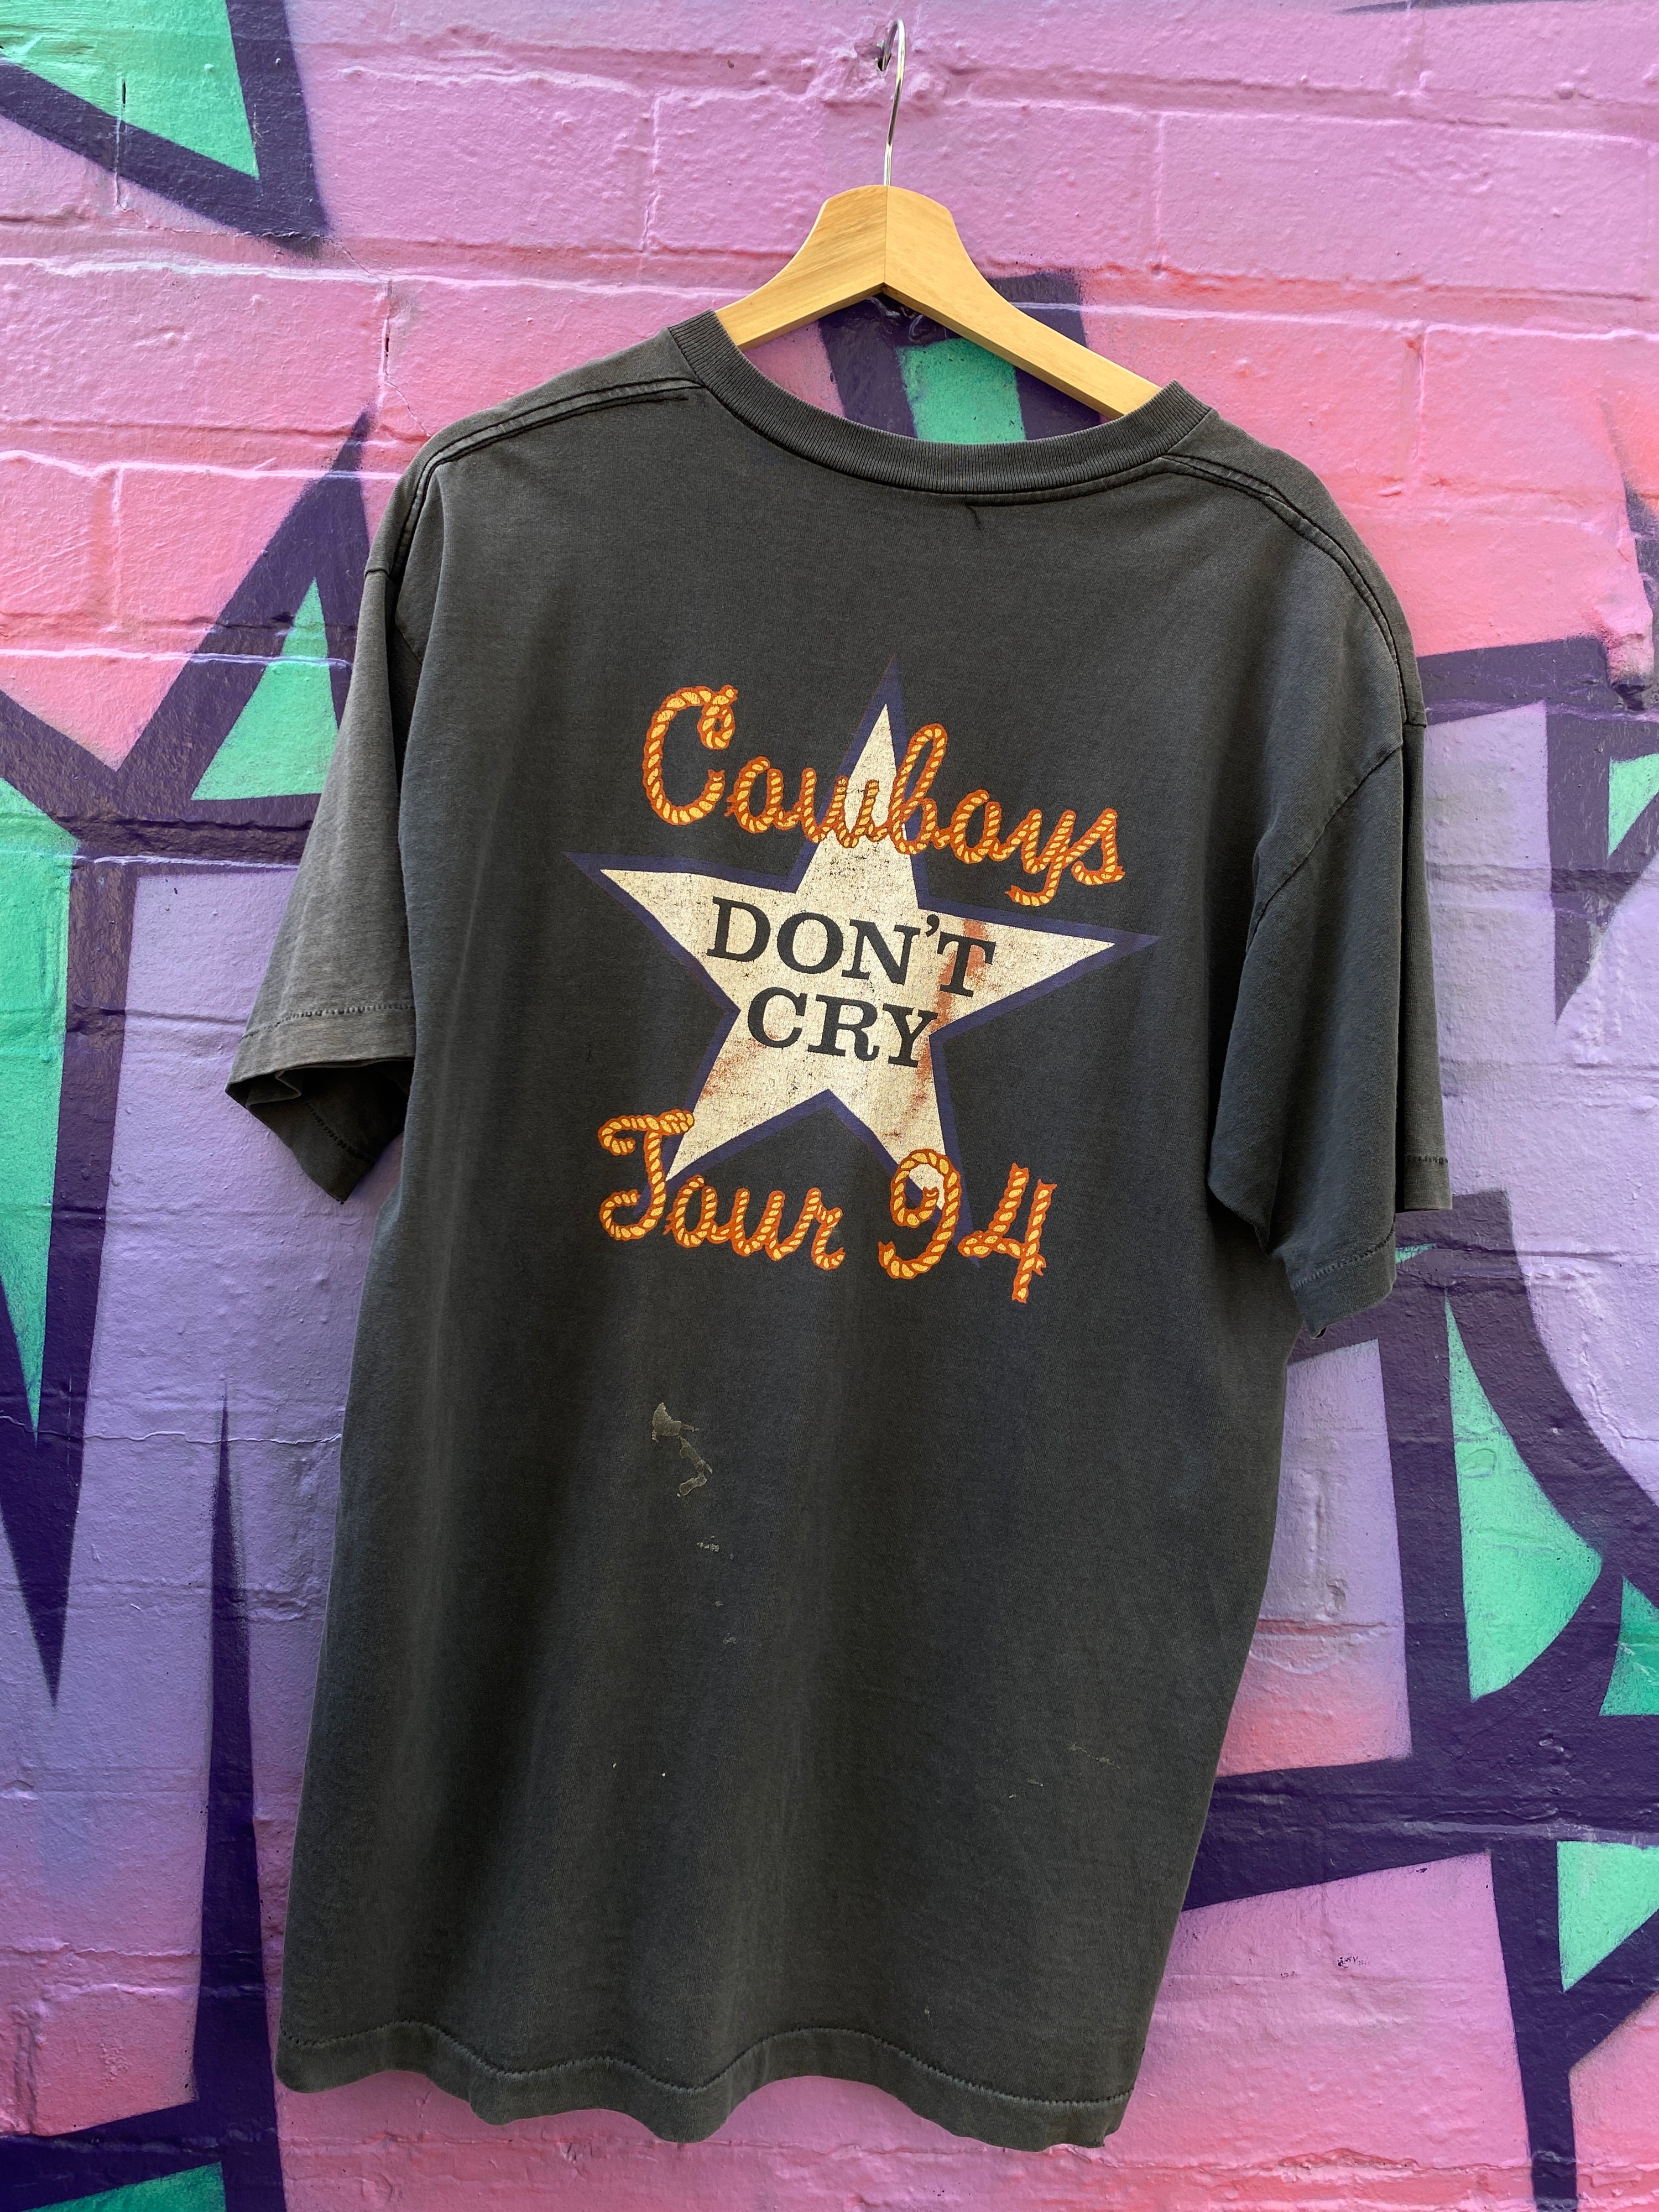 XL - 1994 Daron Norwood Cowboys Don't Cry Tour